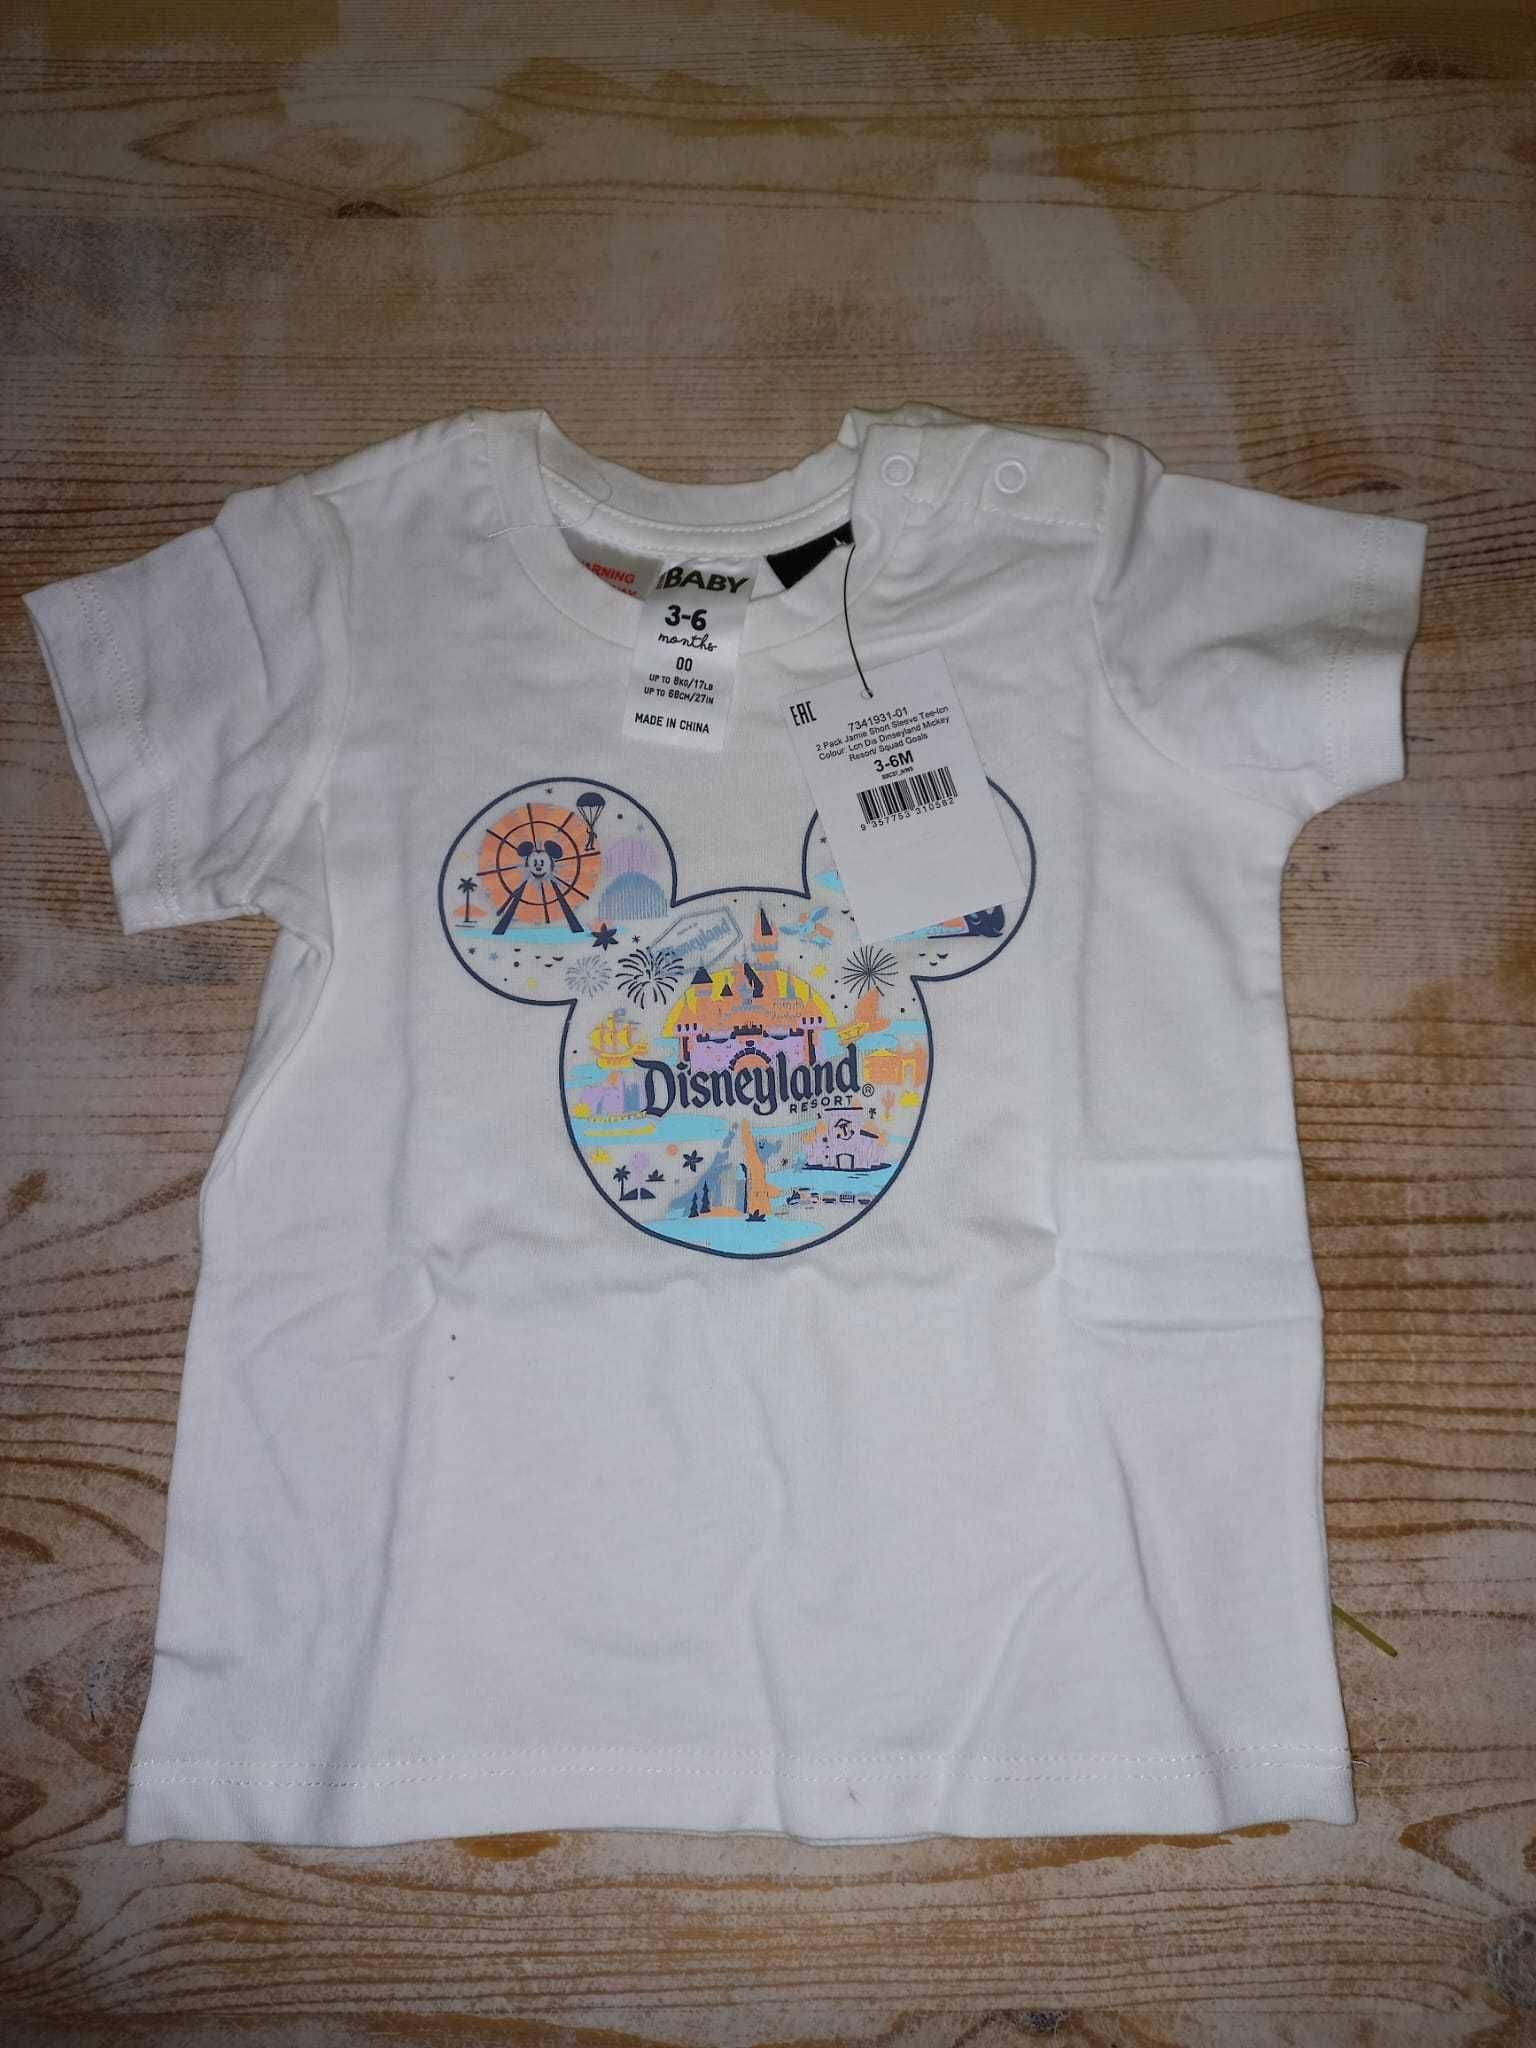 Nowy T-shirt Cotton On baby z serii Disneyland 62-68 cm